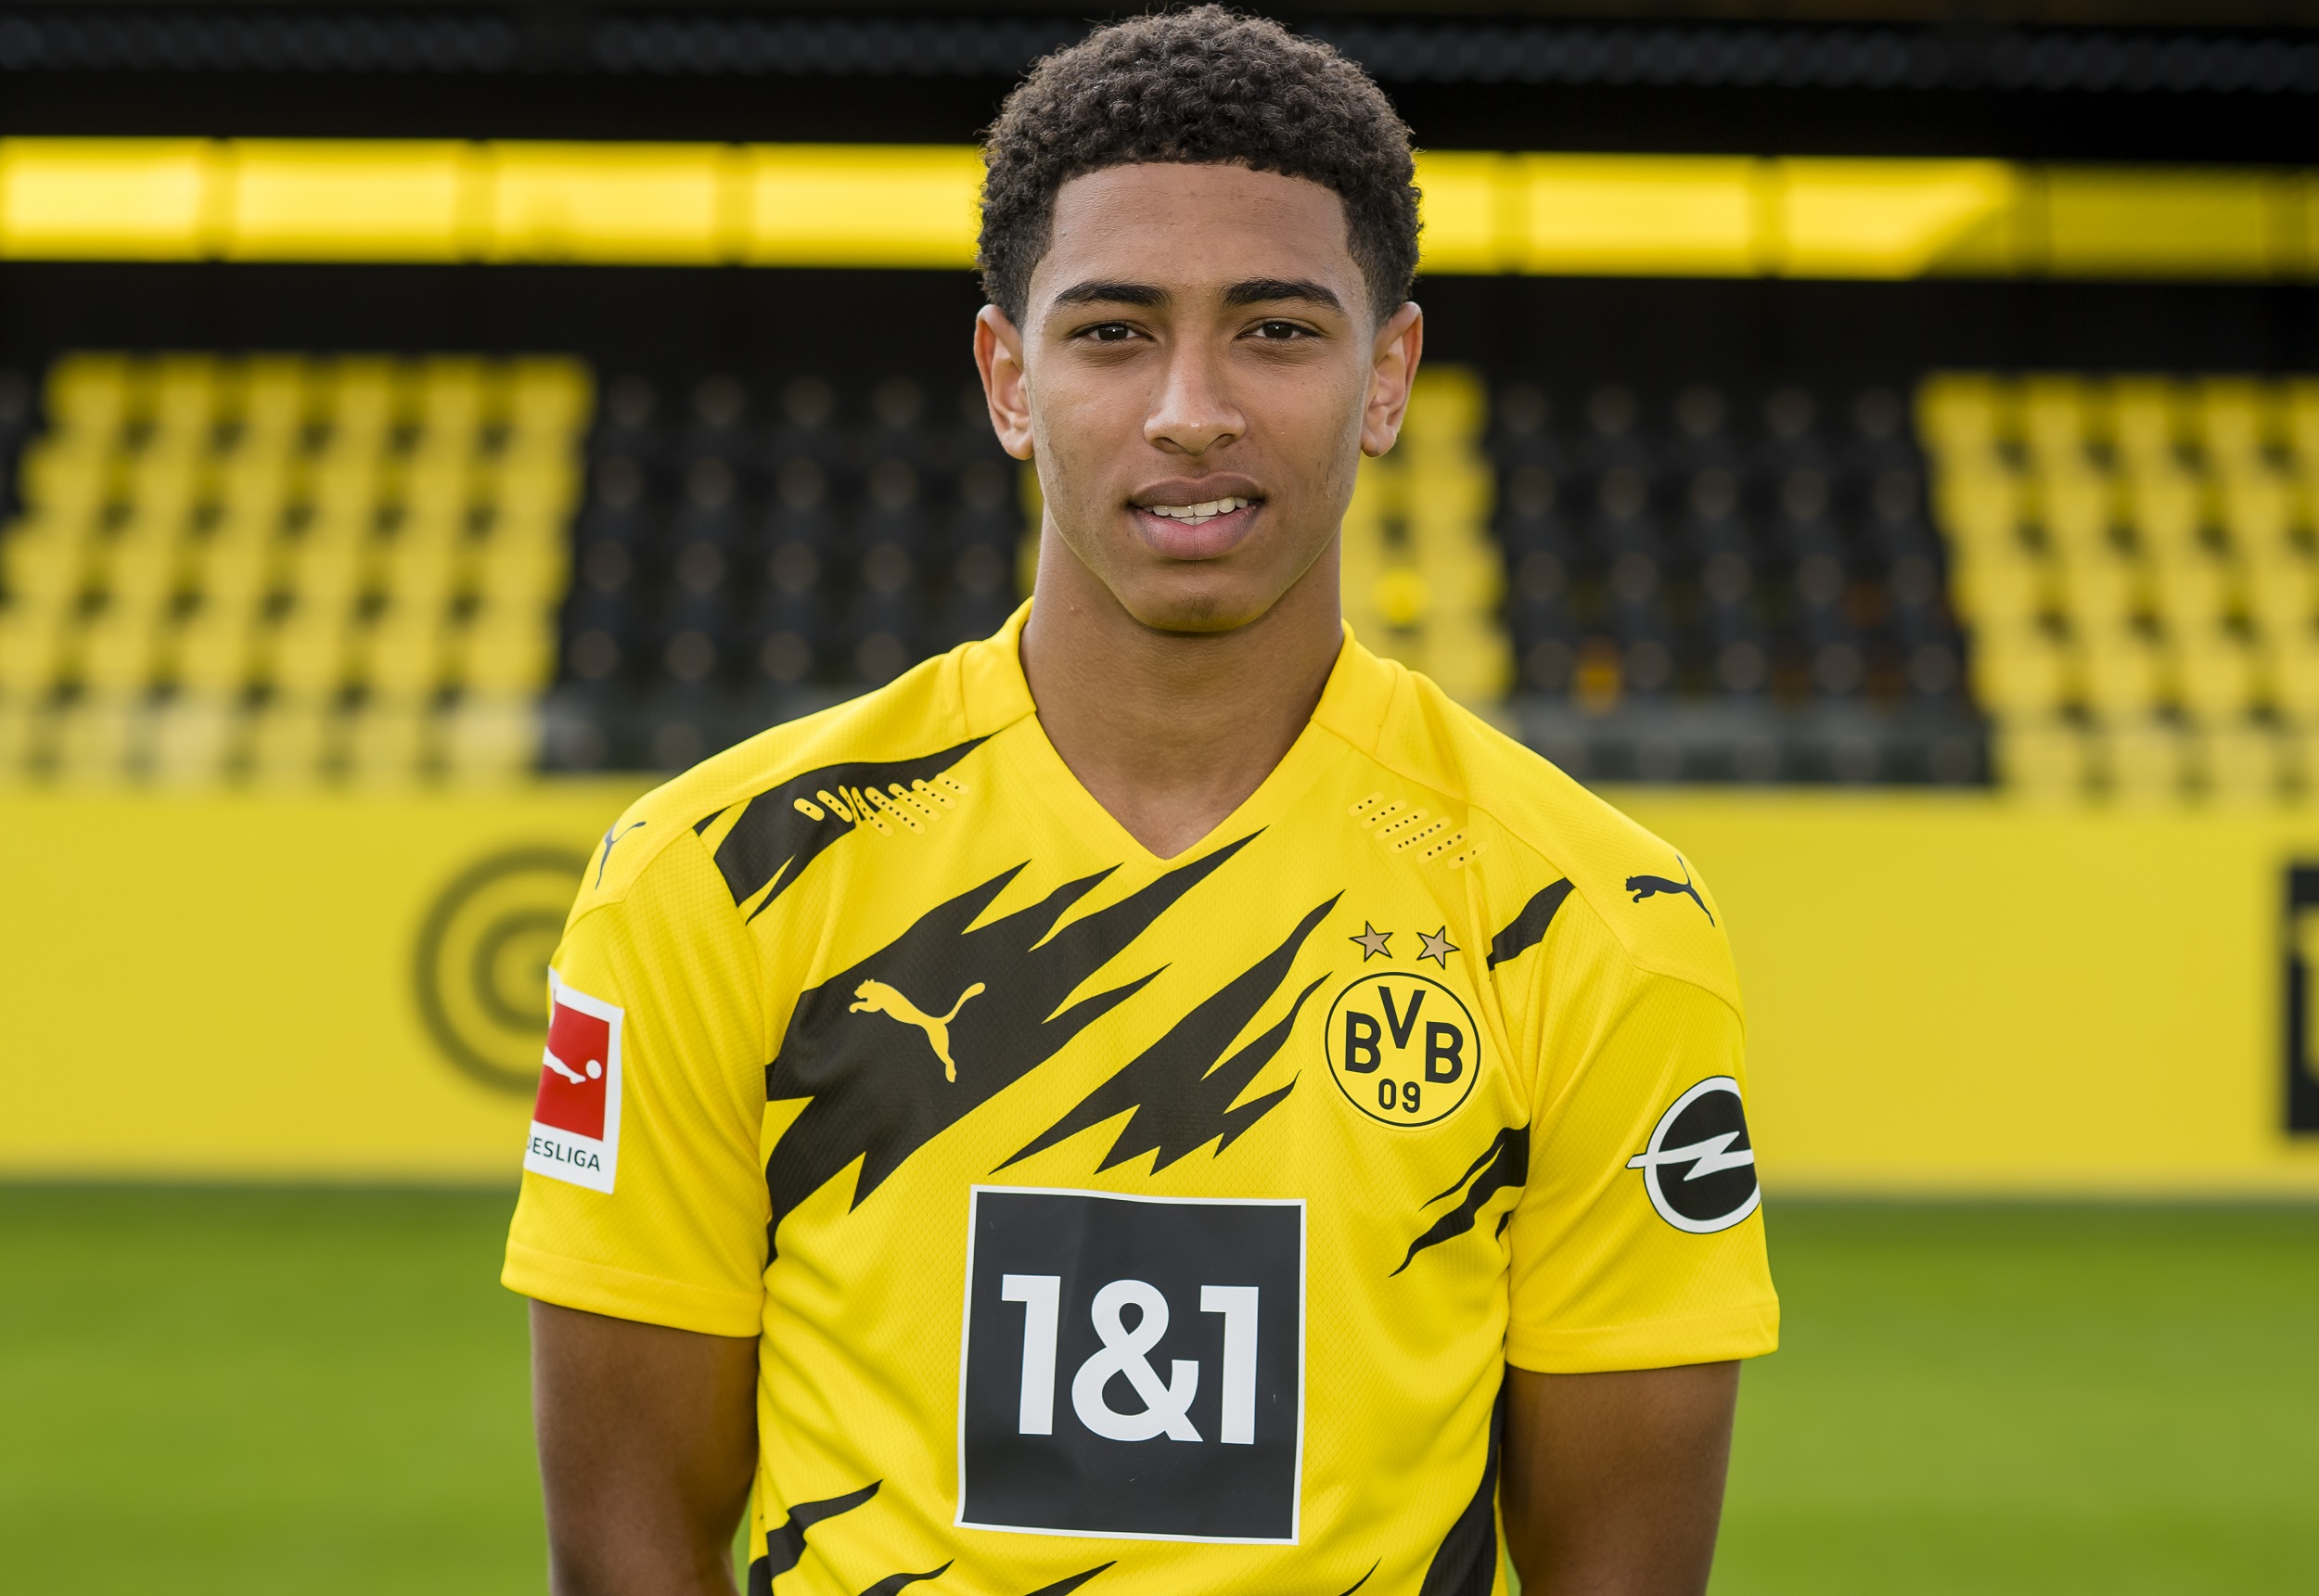 Jude Bellingham shares his first impressions of Dortmund